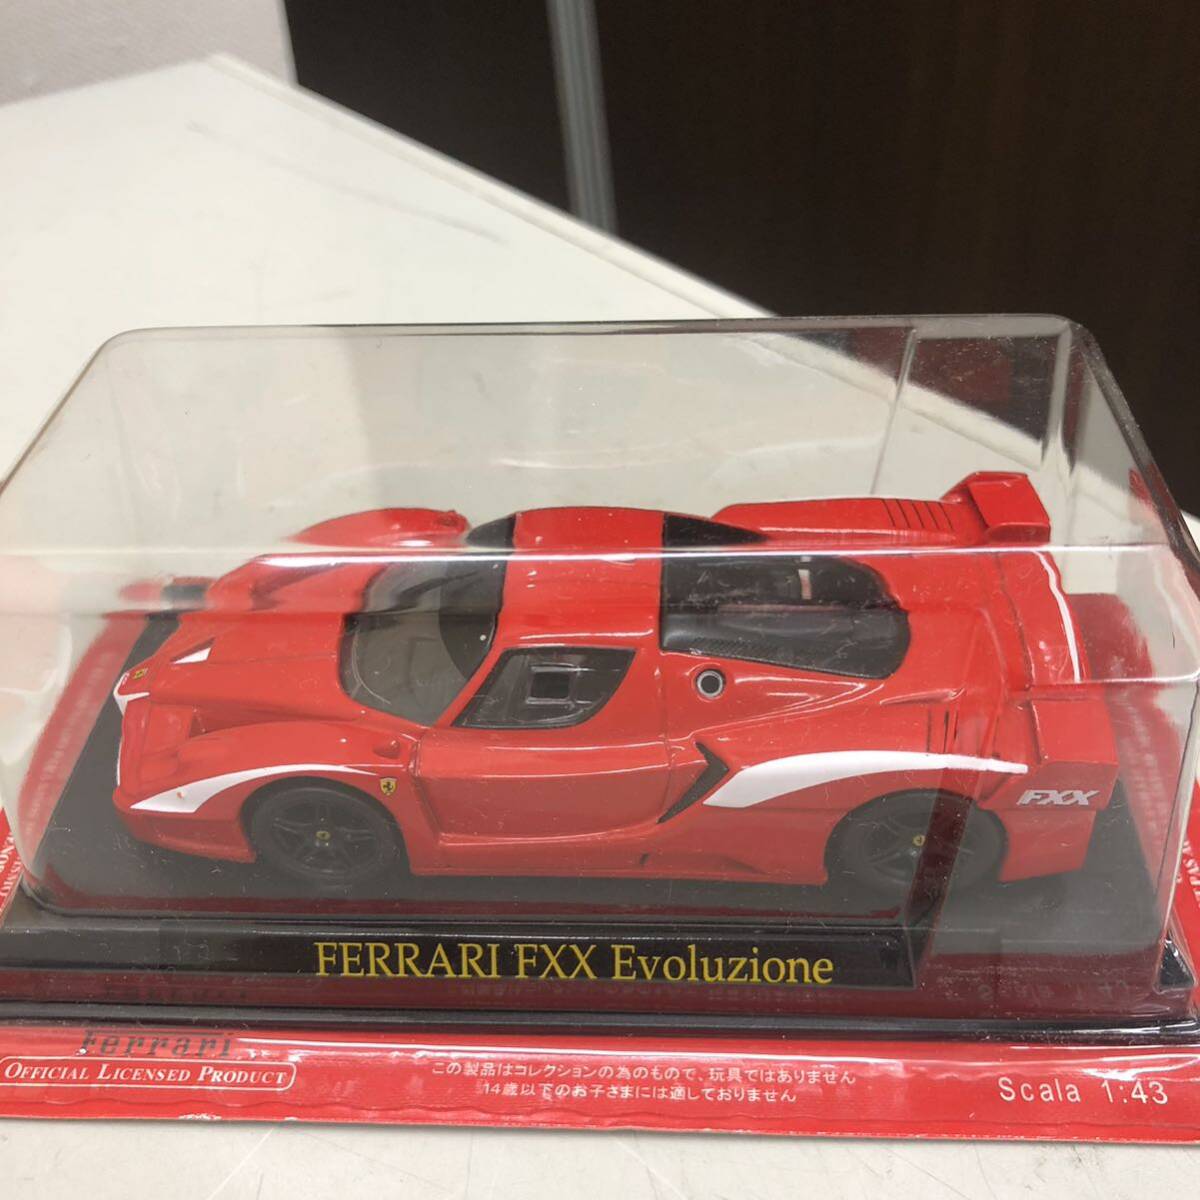  Ferrari официальный лицензия Pro канал 1/43 Ferrari коллекция 6 позиций комплект текущее состояние товар 328 GTS 250 TESTAROSSA Evoluzione